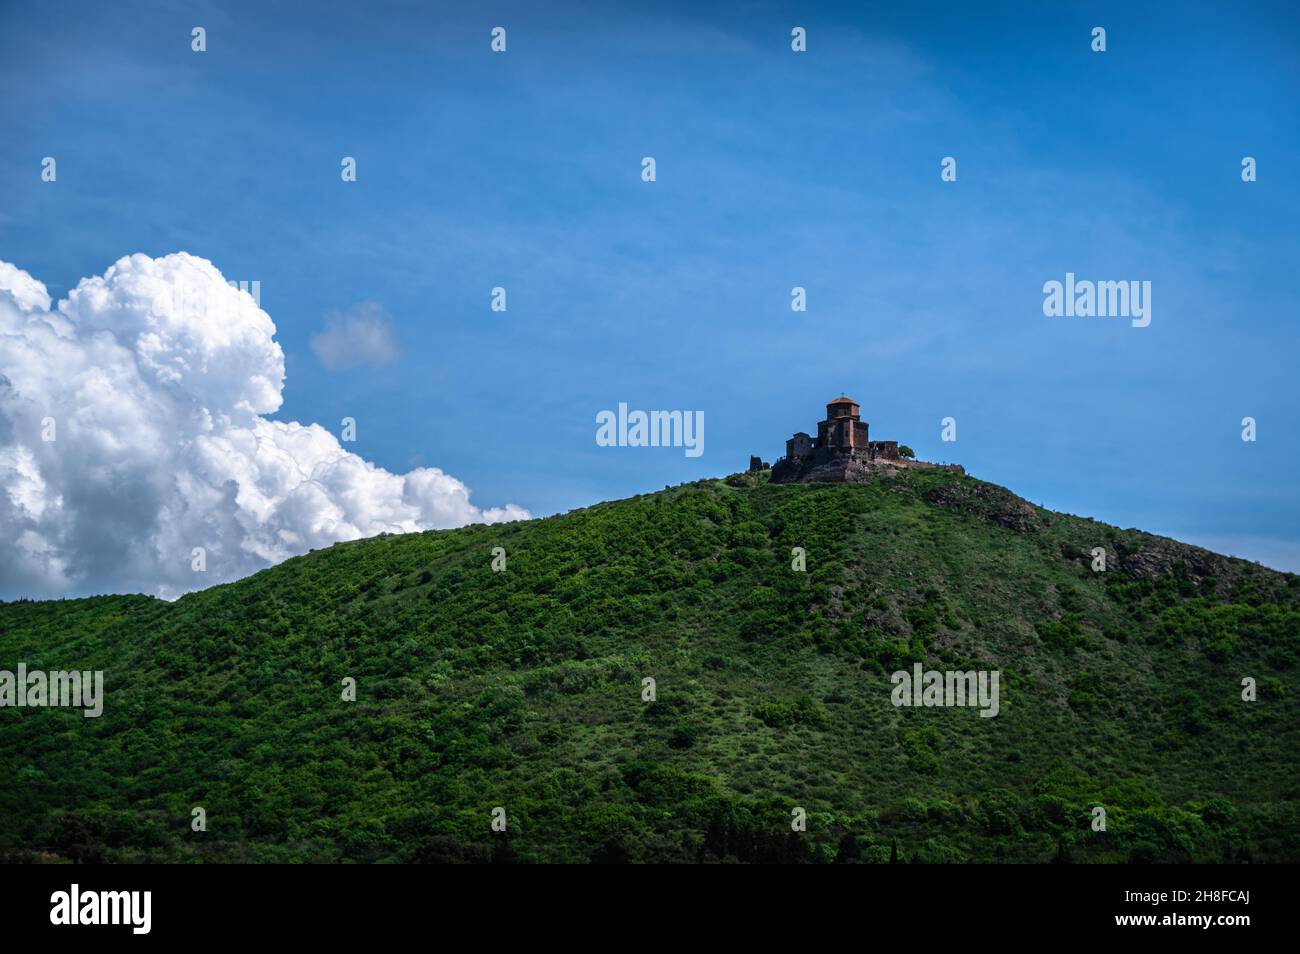 Scenic view of Jvari Monastery against cloudy skies in the city of Mtskheta, Georgia. Stock Photo